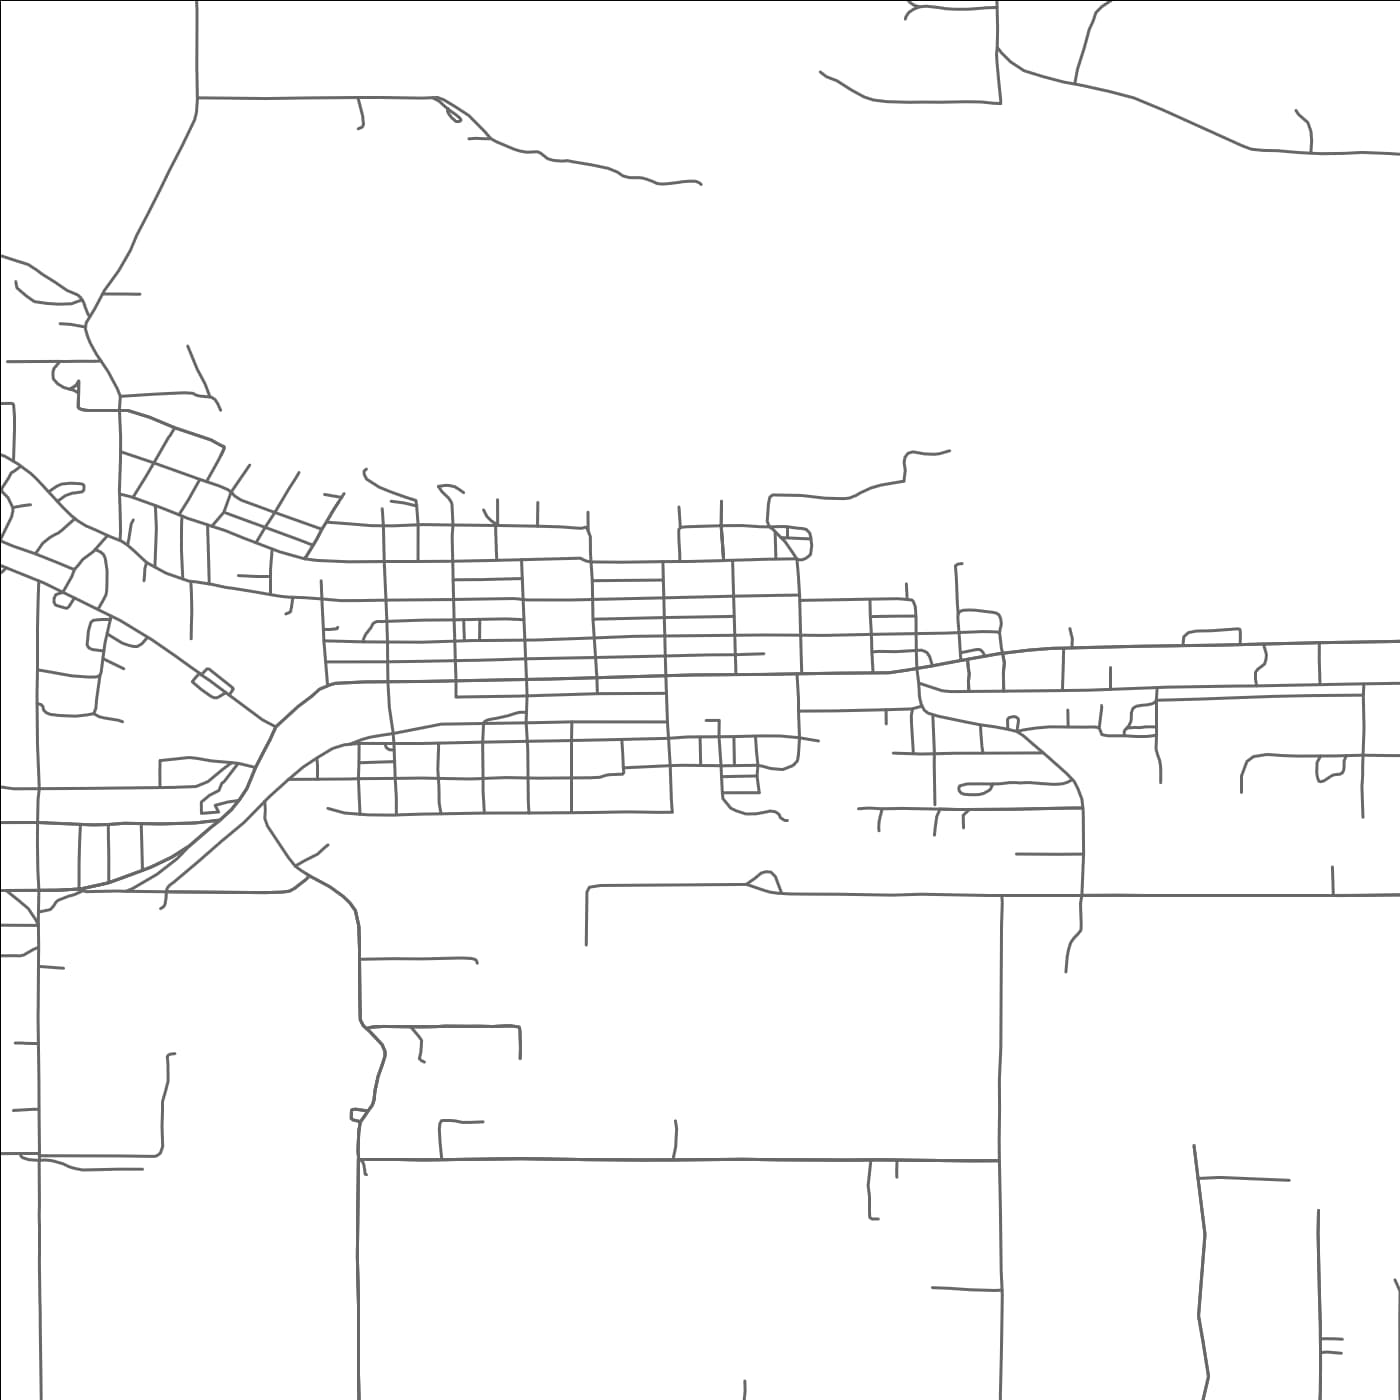 ROAD MAP OF WILBURTON, OKLAHOMA BY MAPBAKES